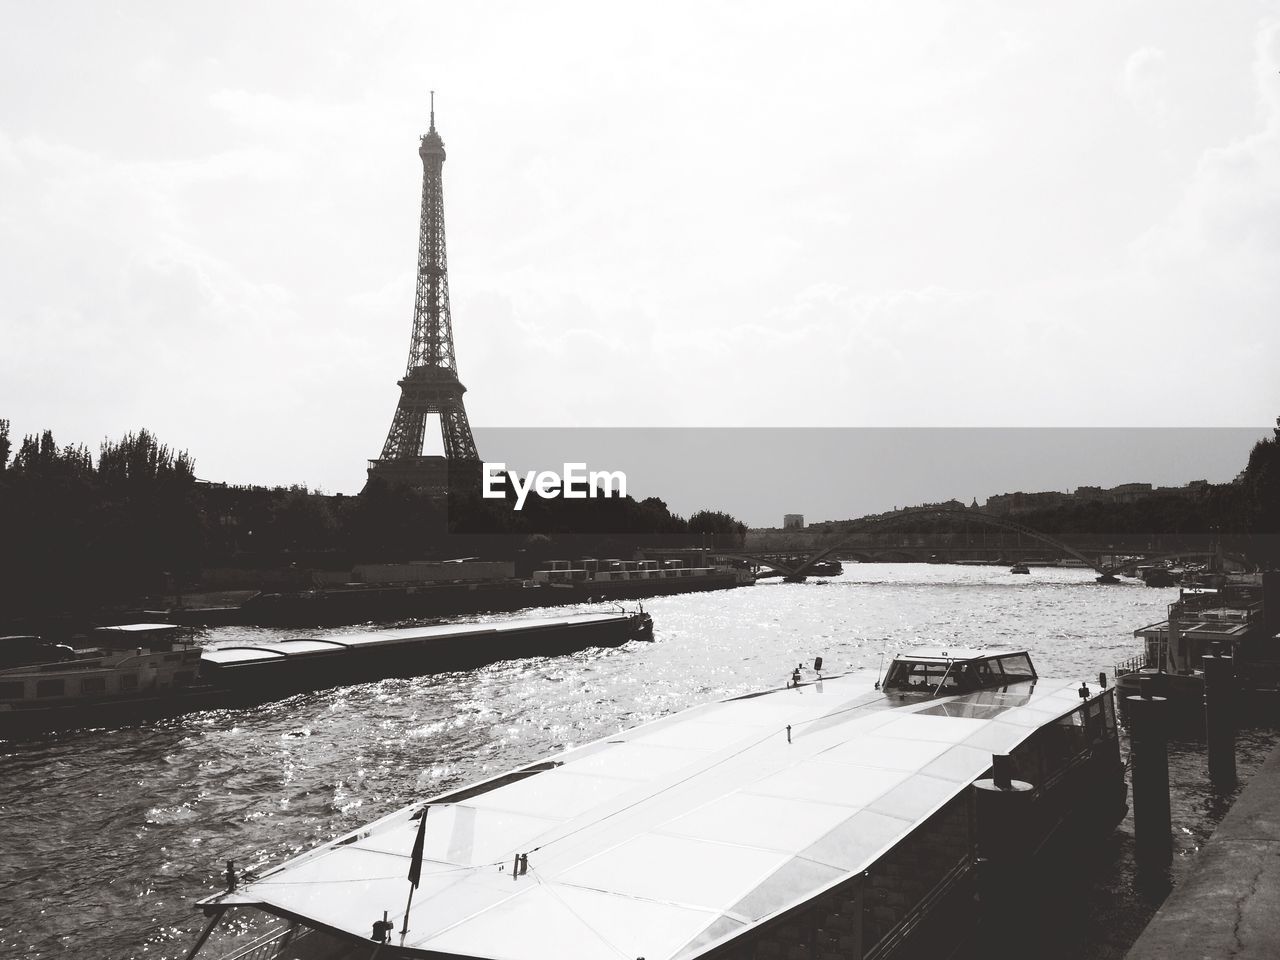 Seine river with eiffel tower in background